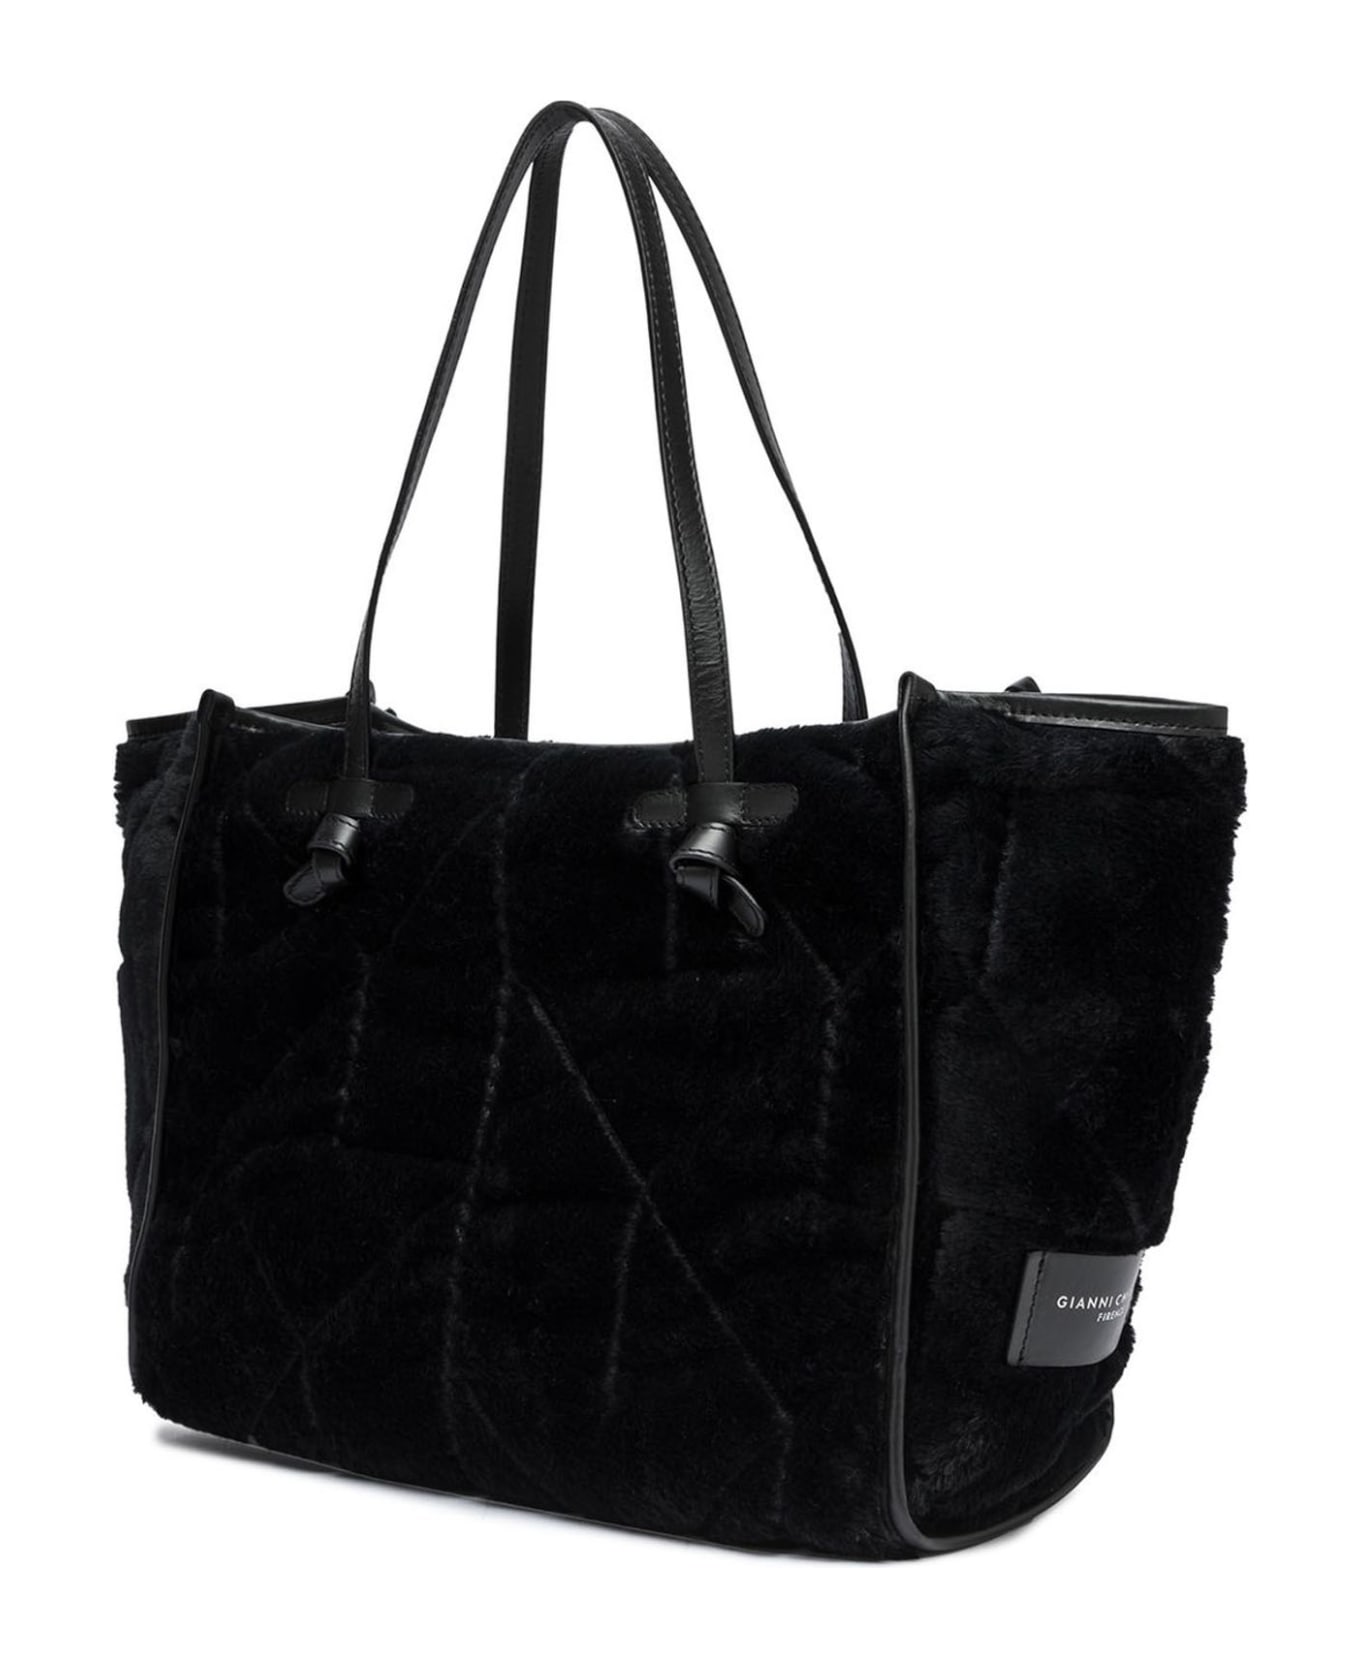 Gianni Chiarini Marcella Tote Bag In Double-layer Fabric Gianni Chiarini - BLACK